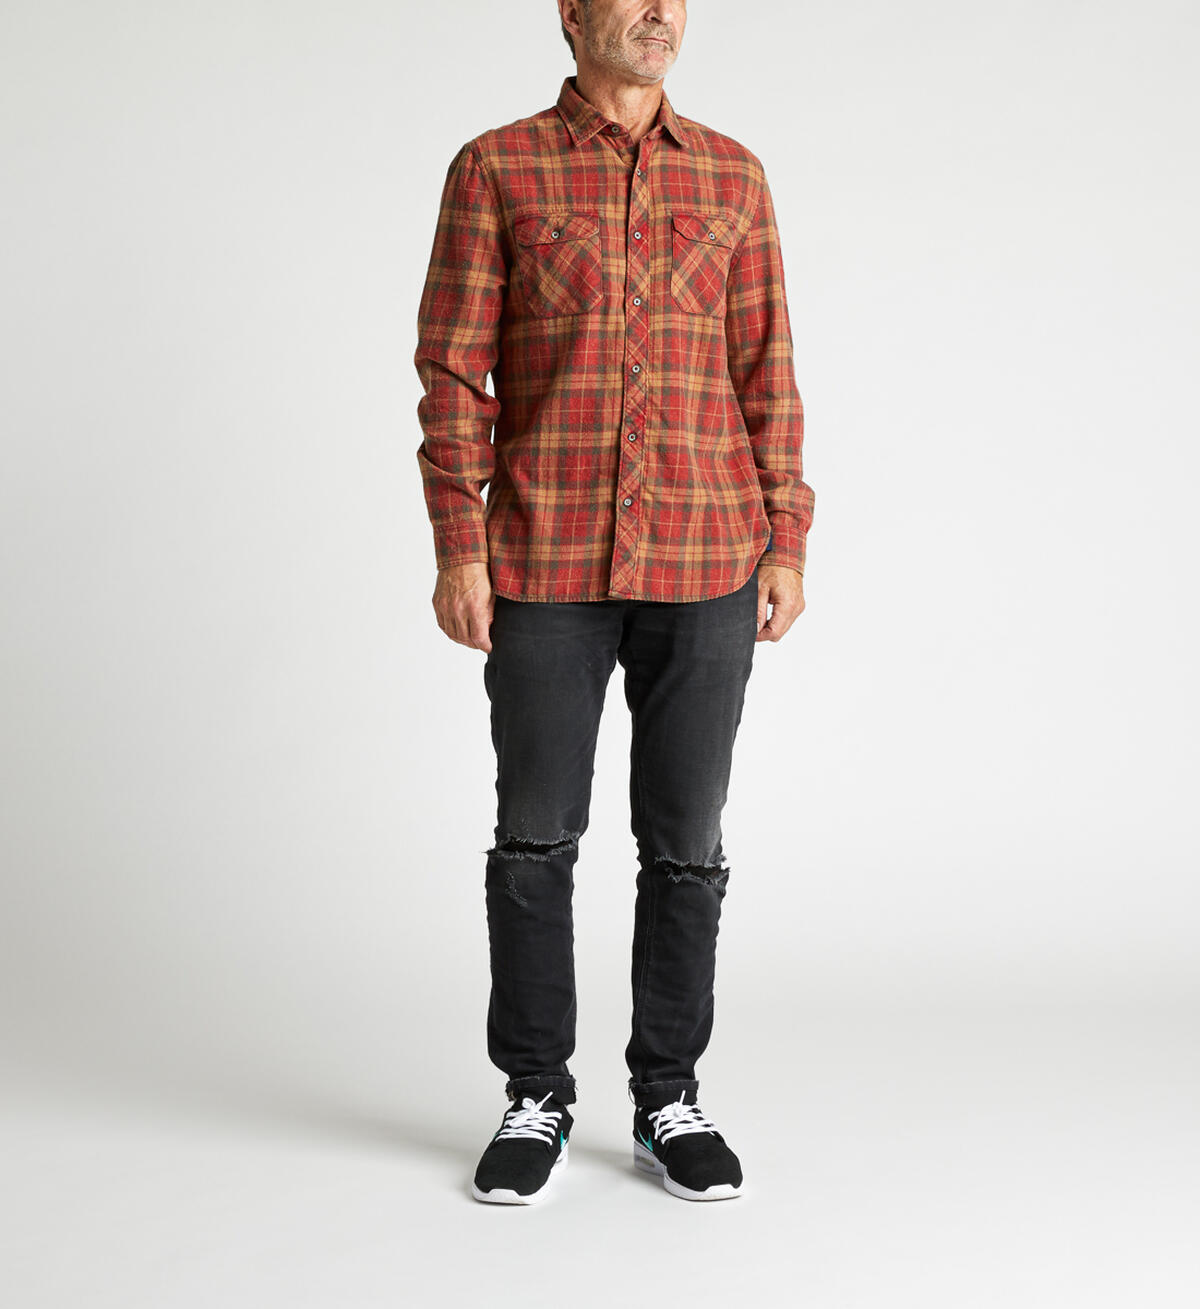 Cornell Long-Sleeve Plaid Shirt, Burgandy, hi-res image number 1